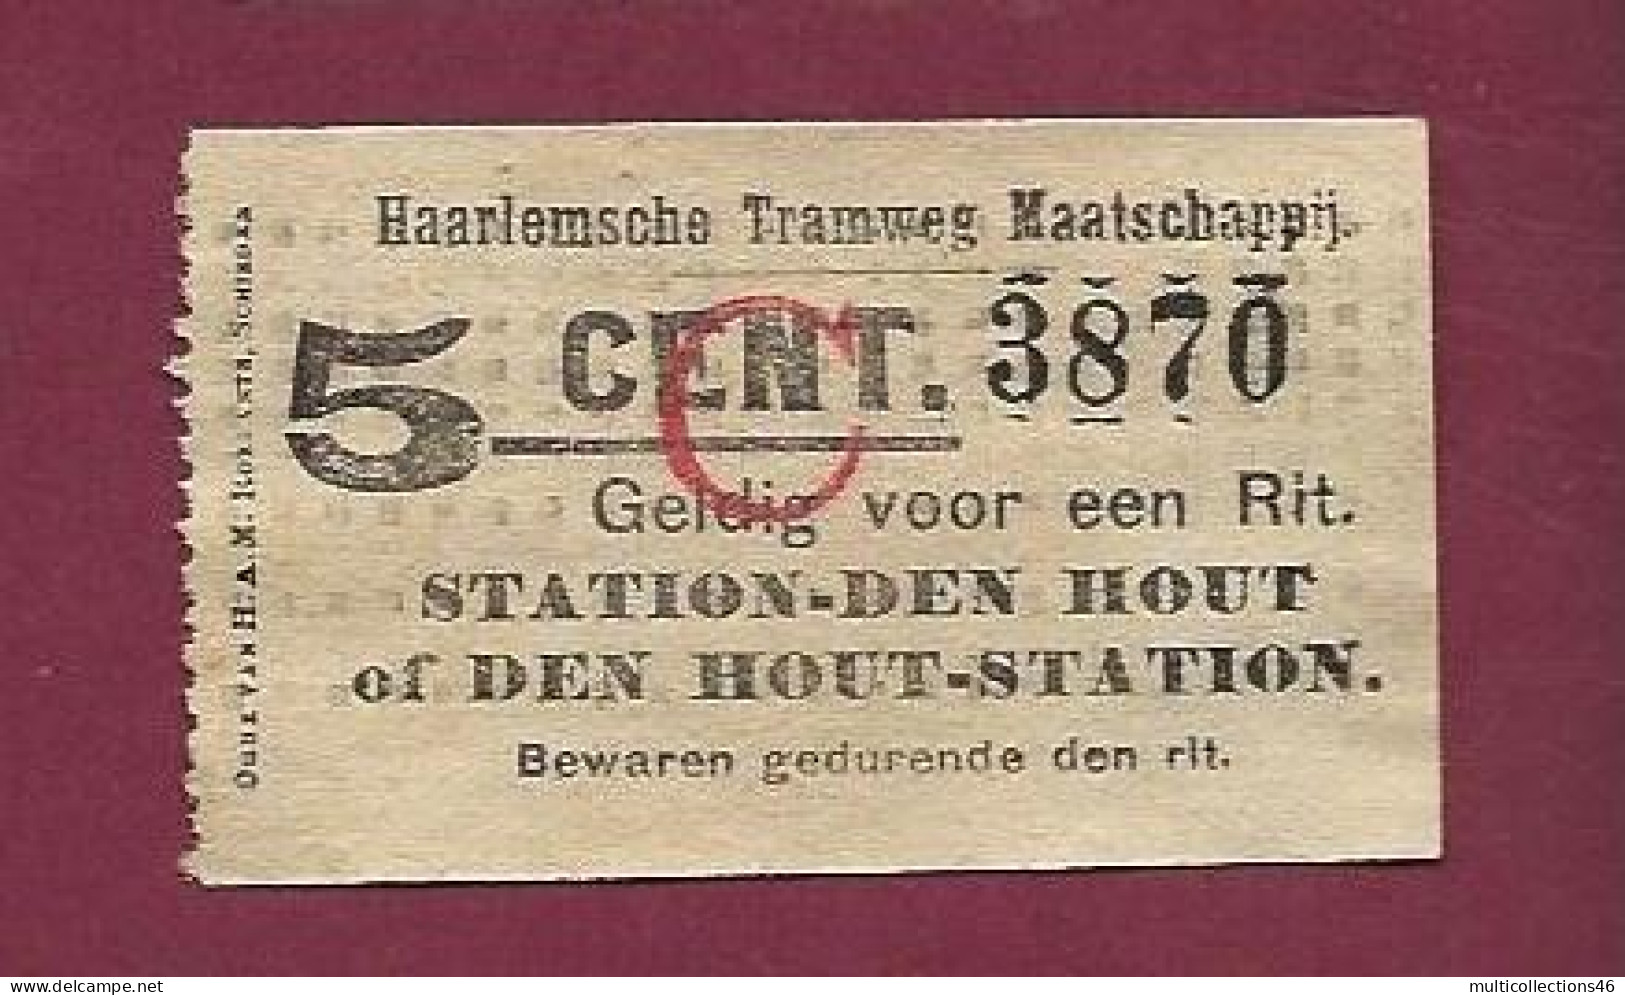 301223 - TICKET CHEMIN DE FER TRAM METRO - PAYS BAS HOLLANDE Haarlemsche Tramweg Maatschappij. 5 CENT. 3870 - Europa